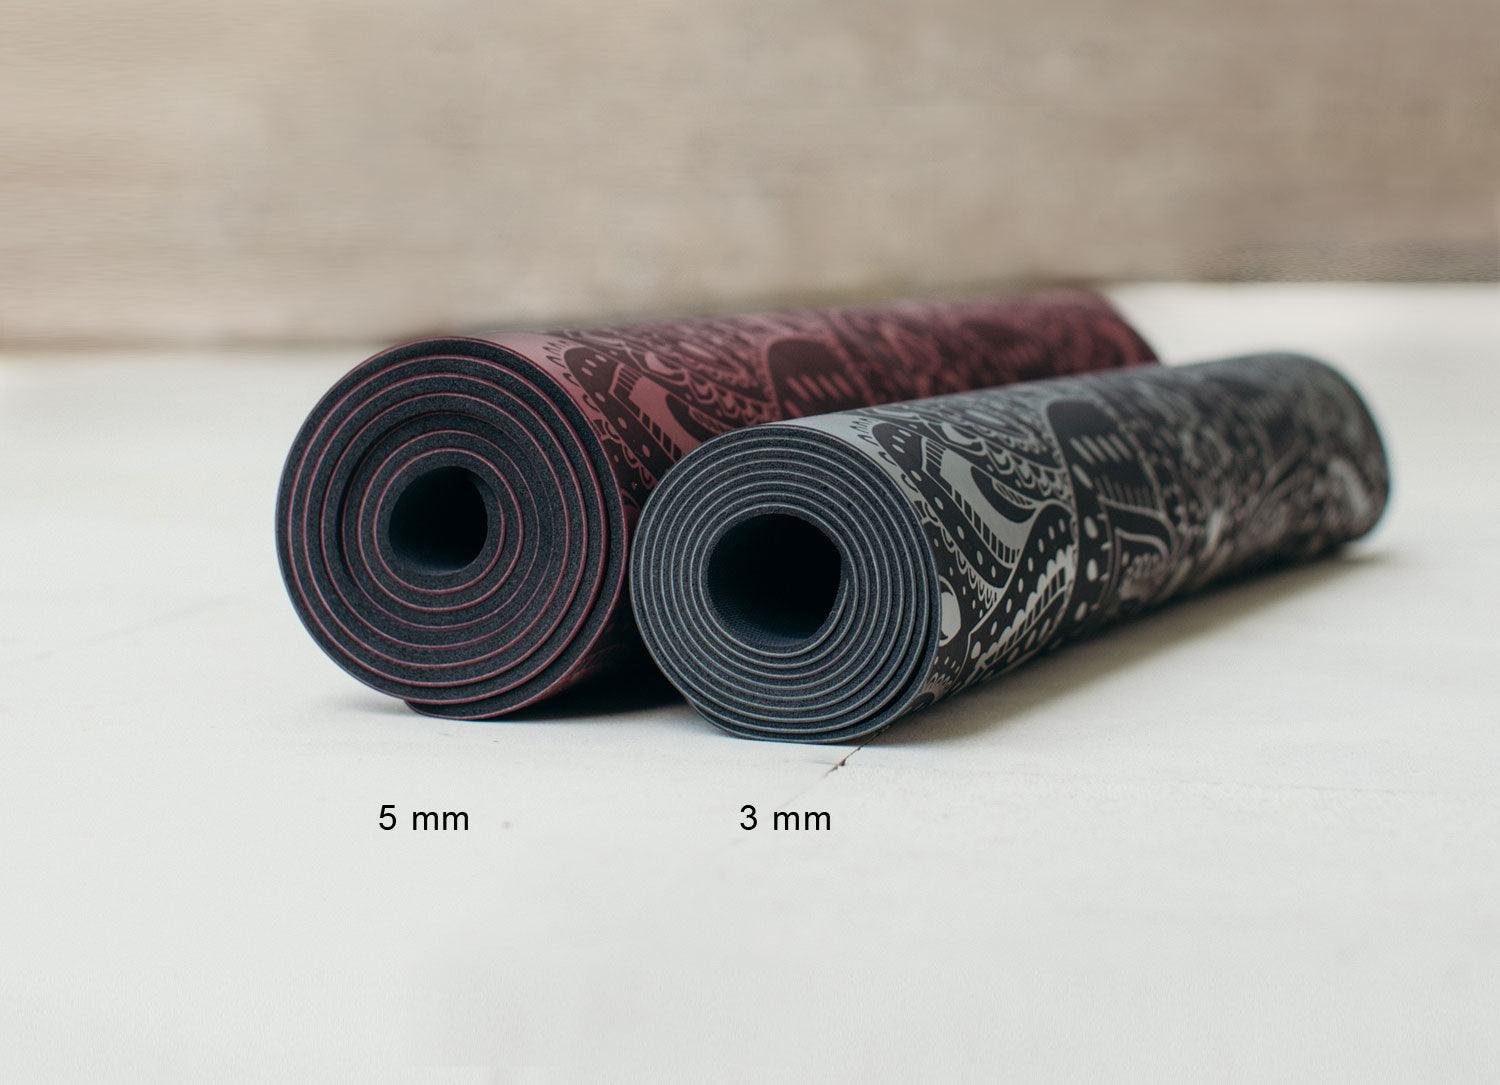 Infinity Yoga Mat - 5mm - Mandala Rose - The Best Yoga Mat provides great  support